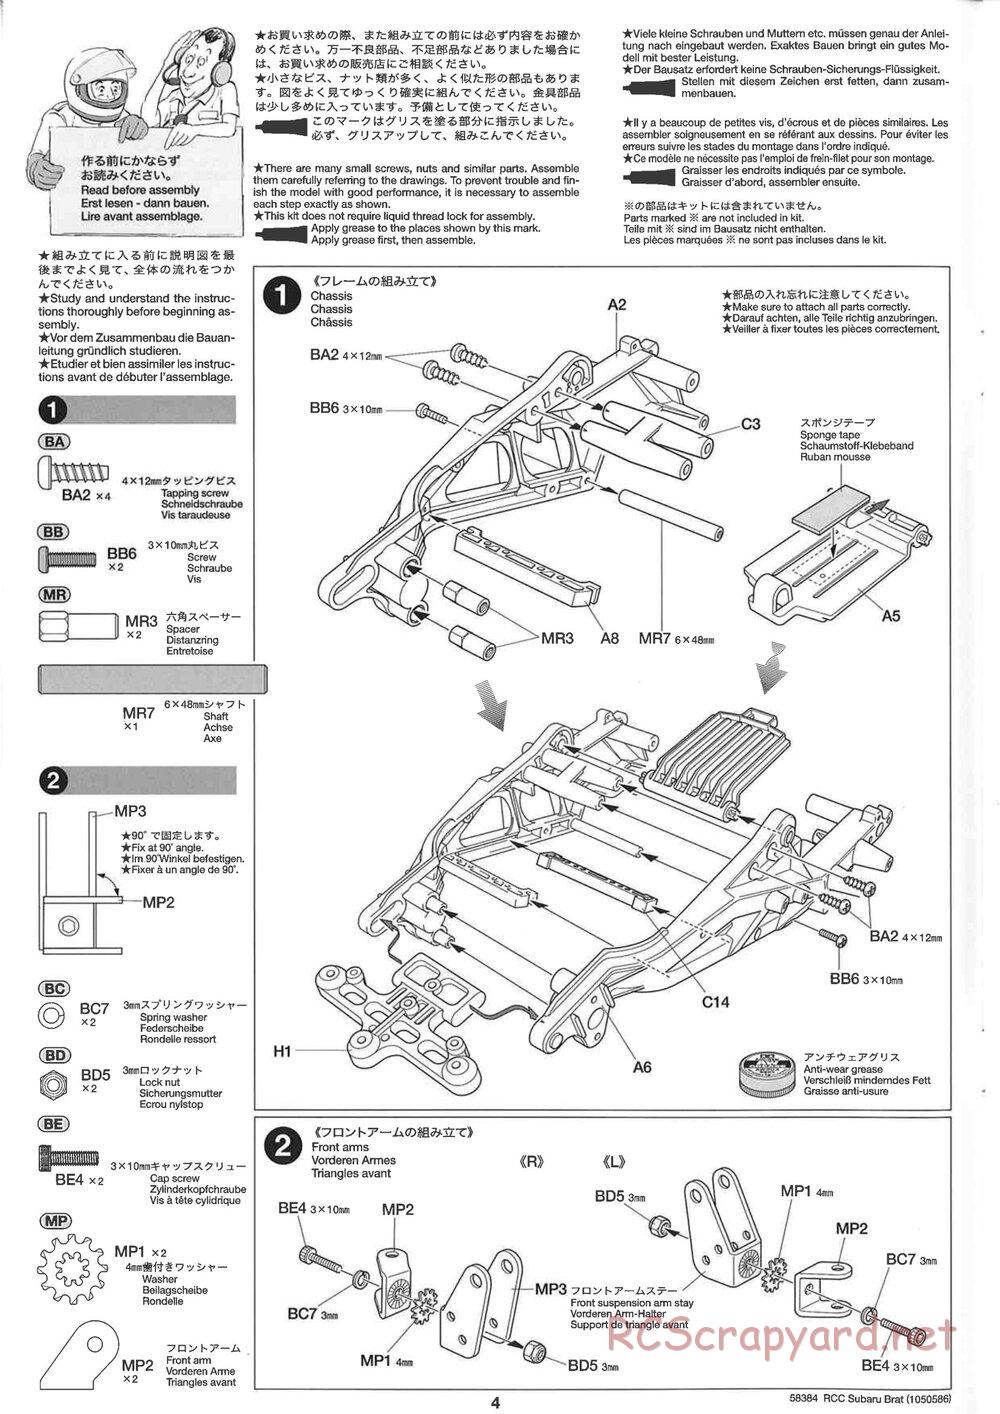 Tamiya - Subaru Brat 2007 - ORV Chassis - Manual - Page 4